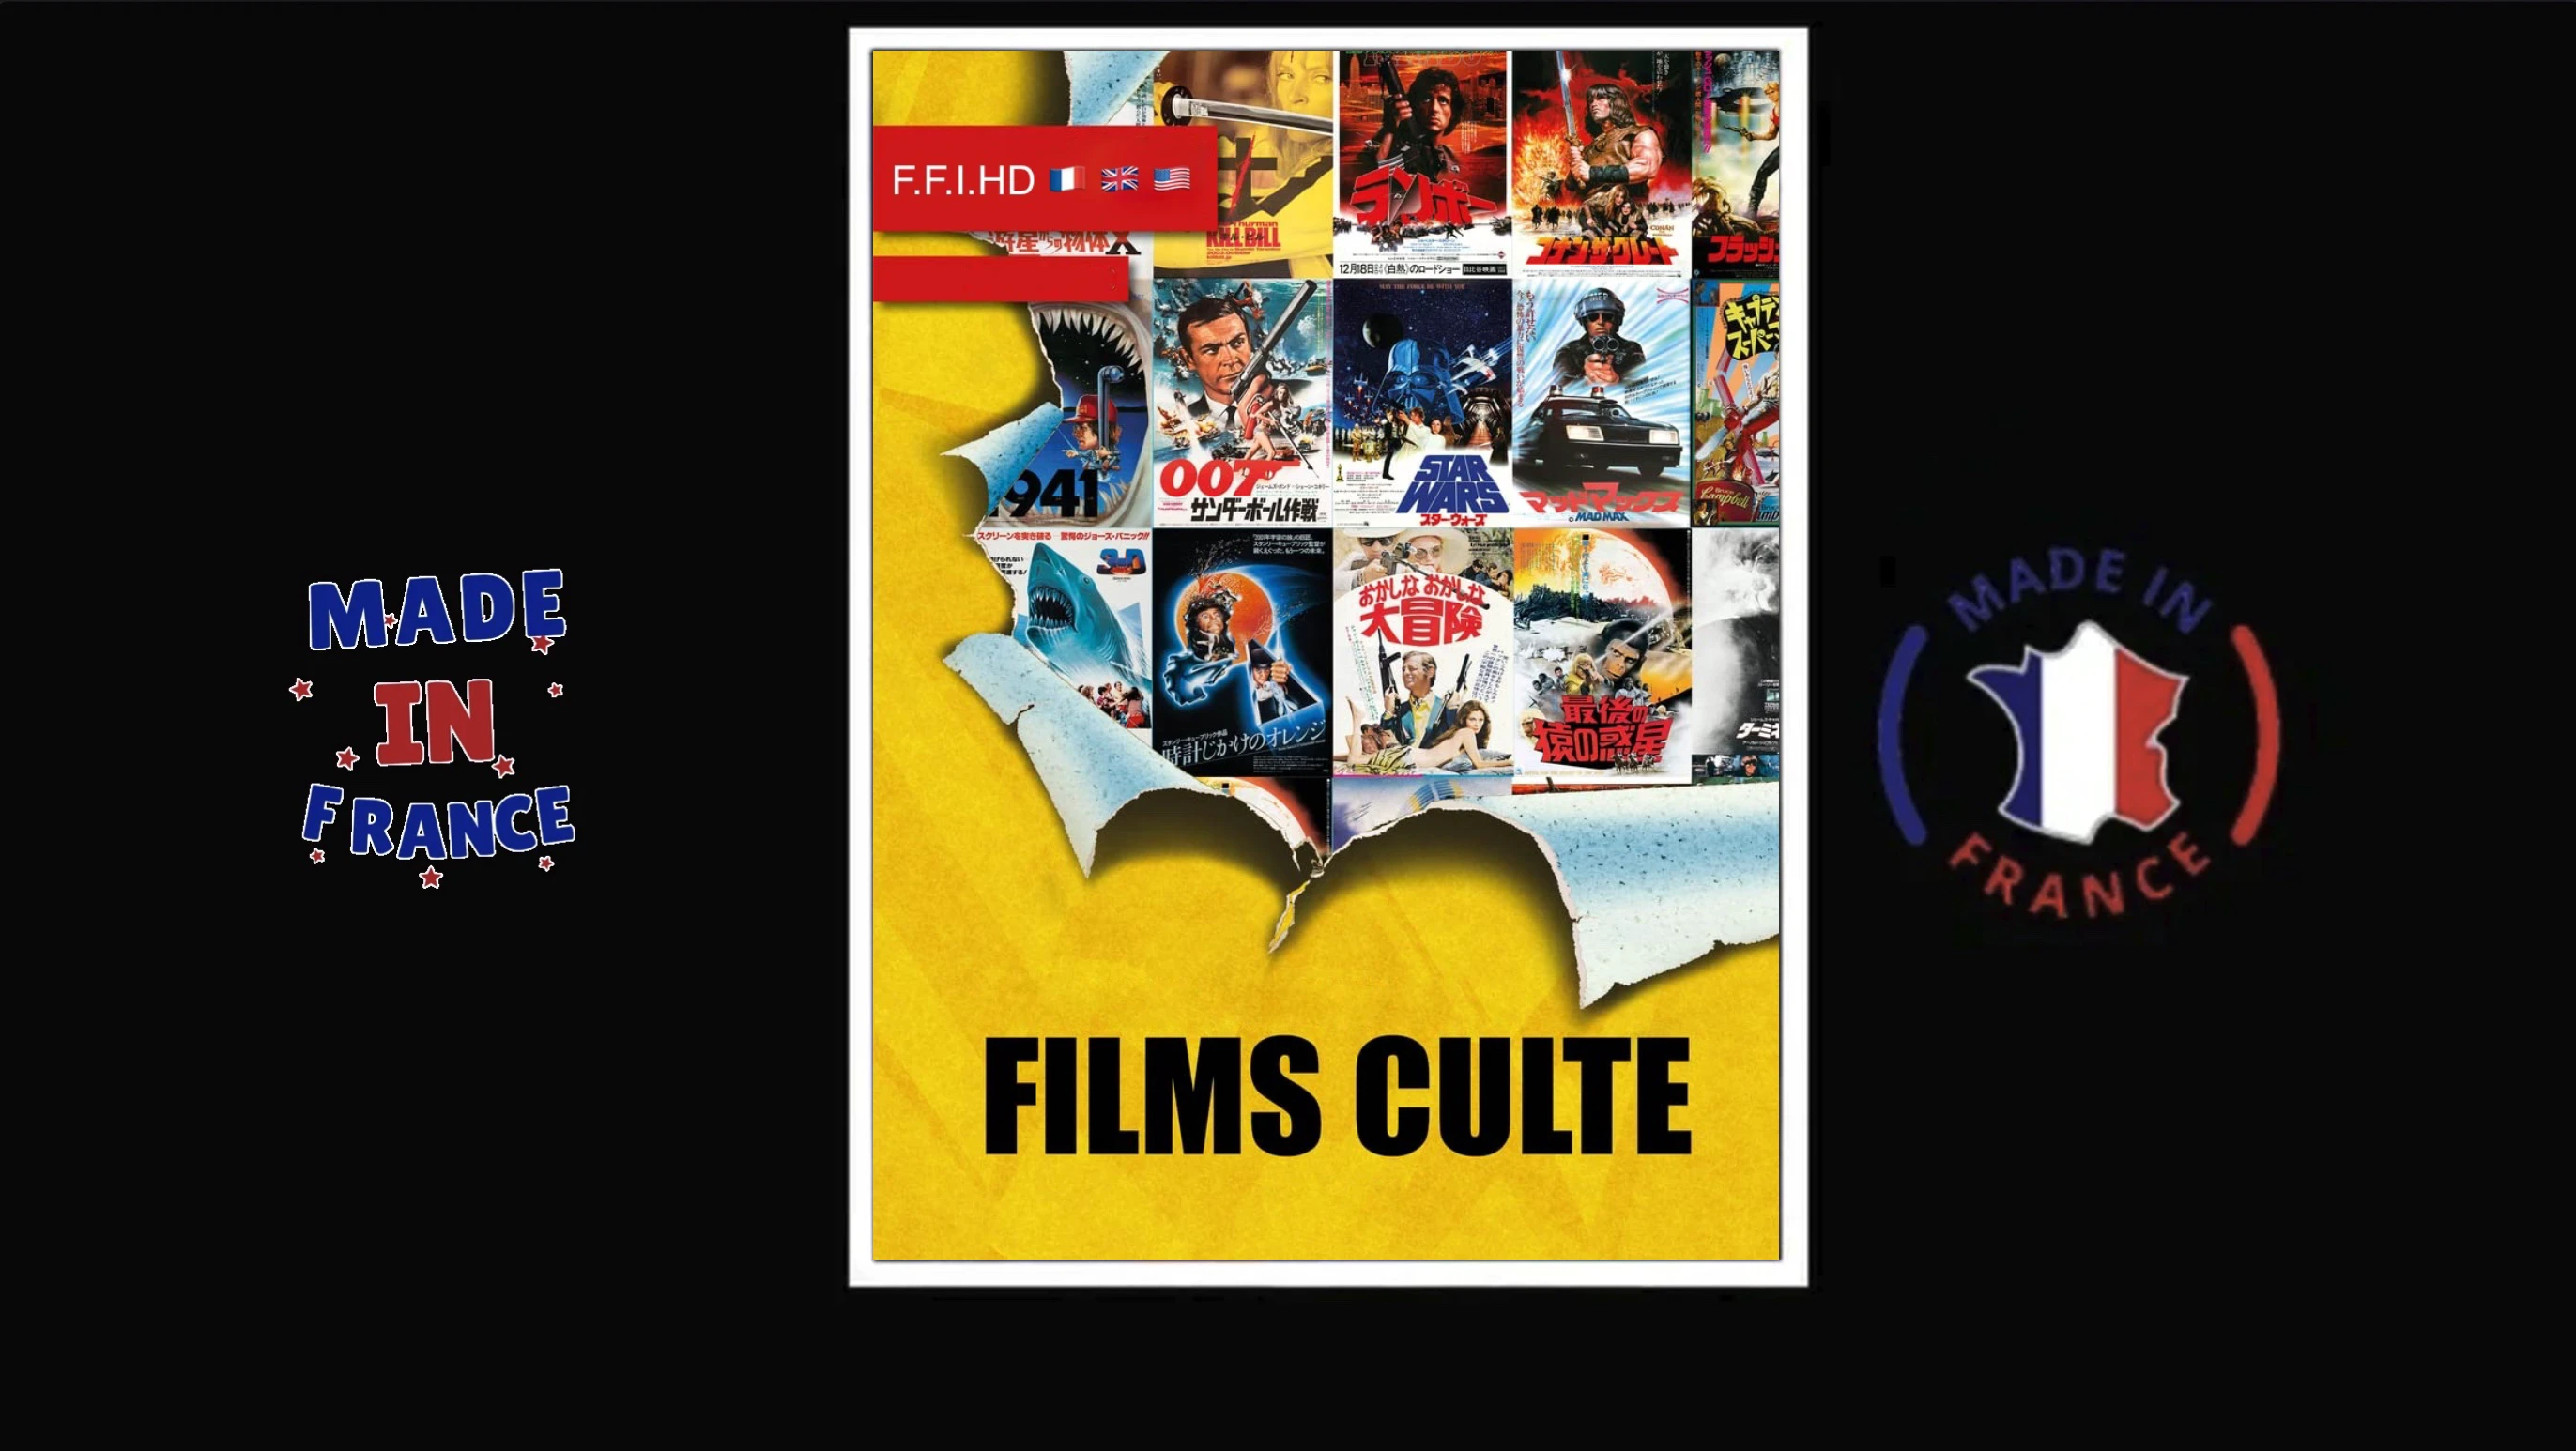 73 Films Culte (Films Culte)F.F.I.HD 🇫🇷 🇬🇧 🇺🇸